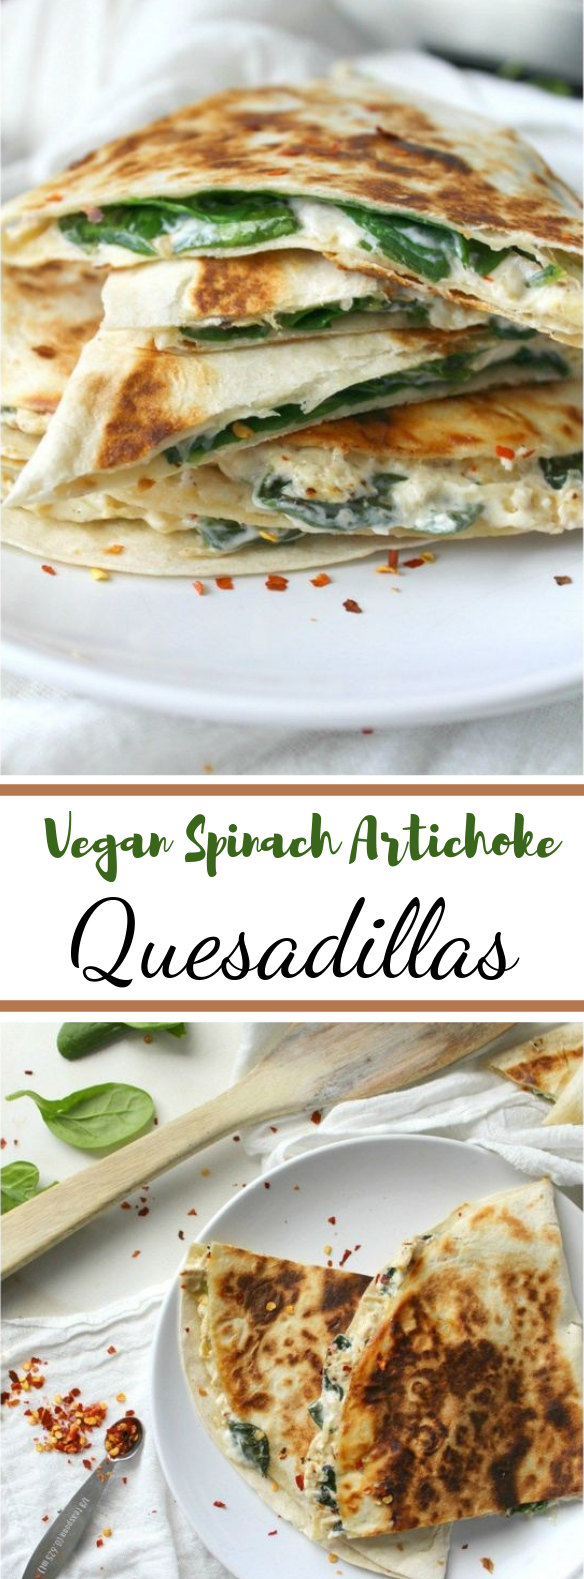 Vegan Spinach Artichoke Quesadillas #snack #vegetarian